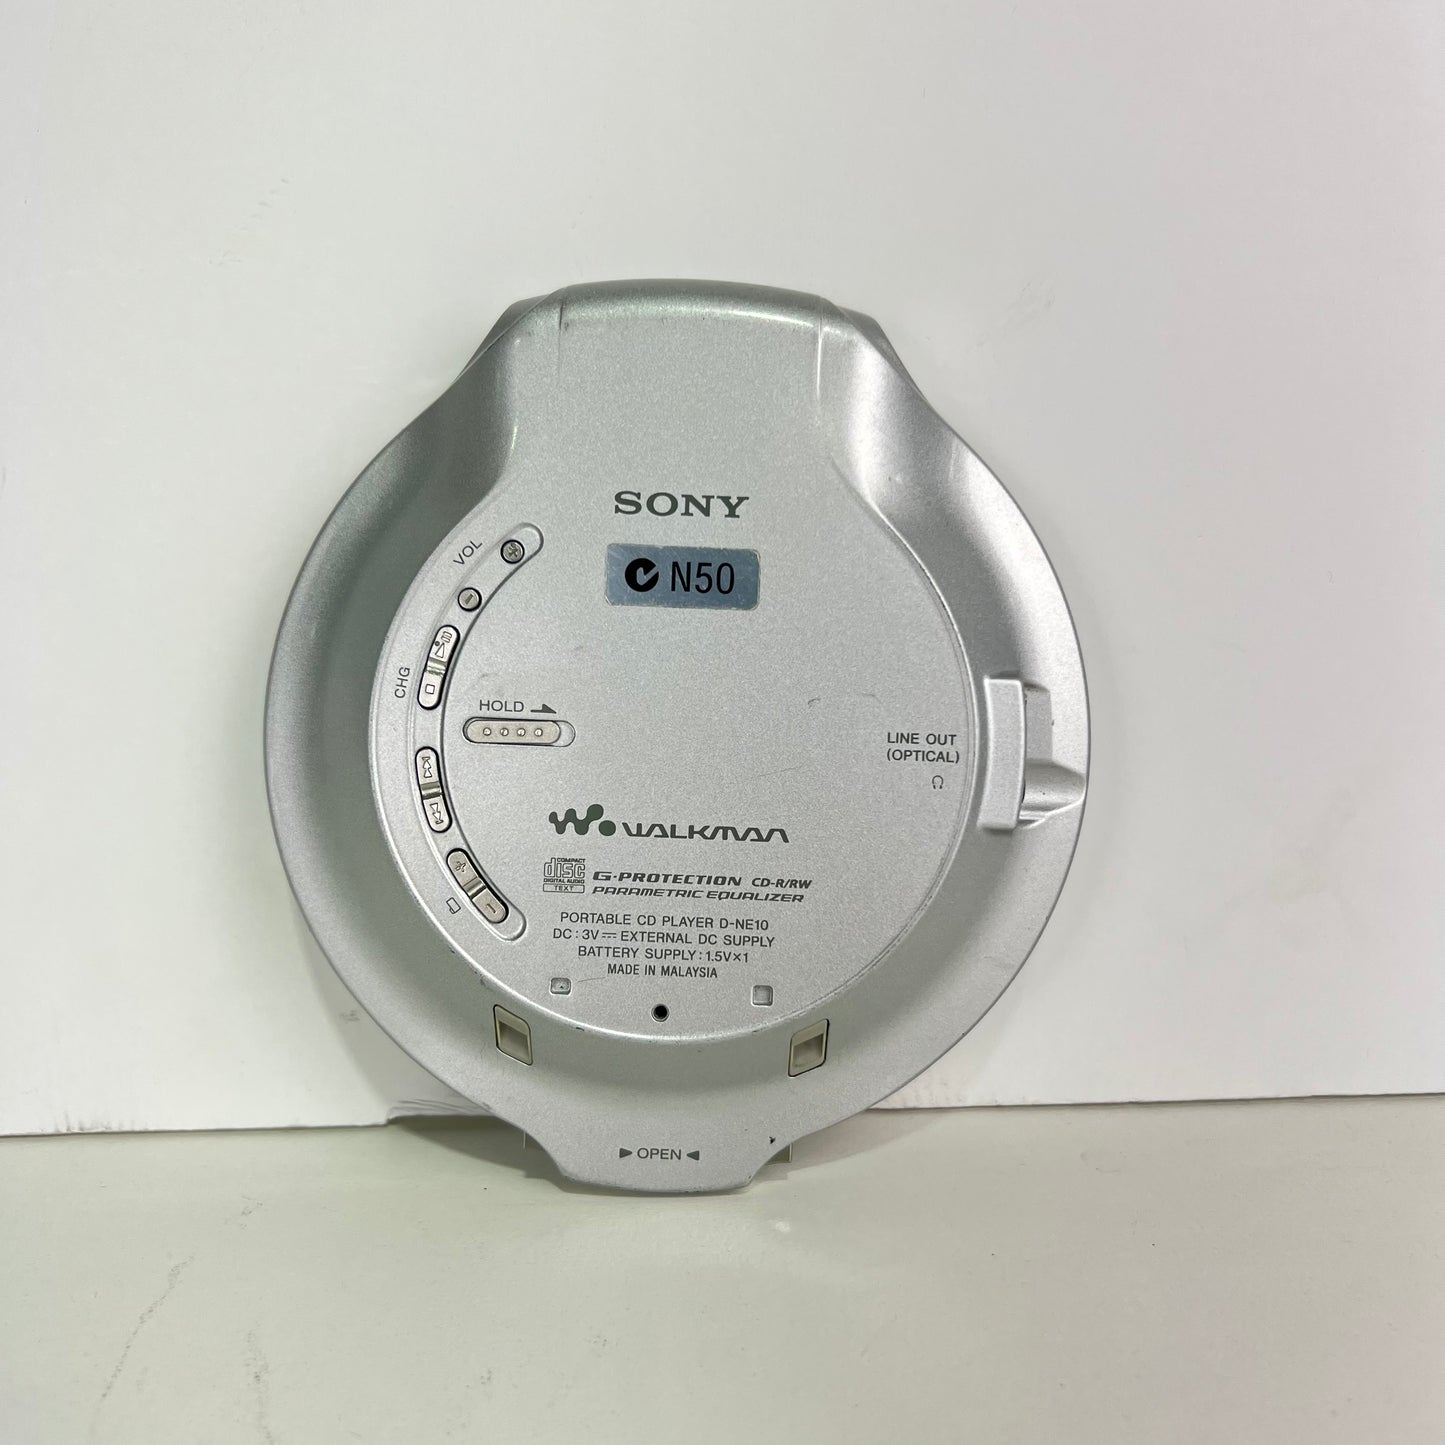 Sony Walkman CD D-NE10 With LCD Remote Control